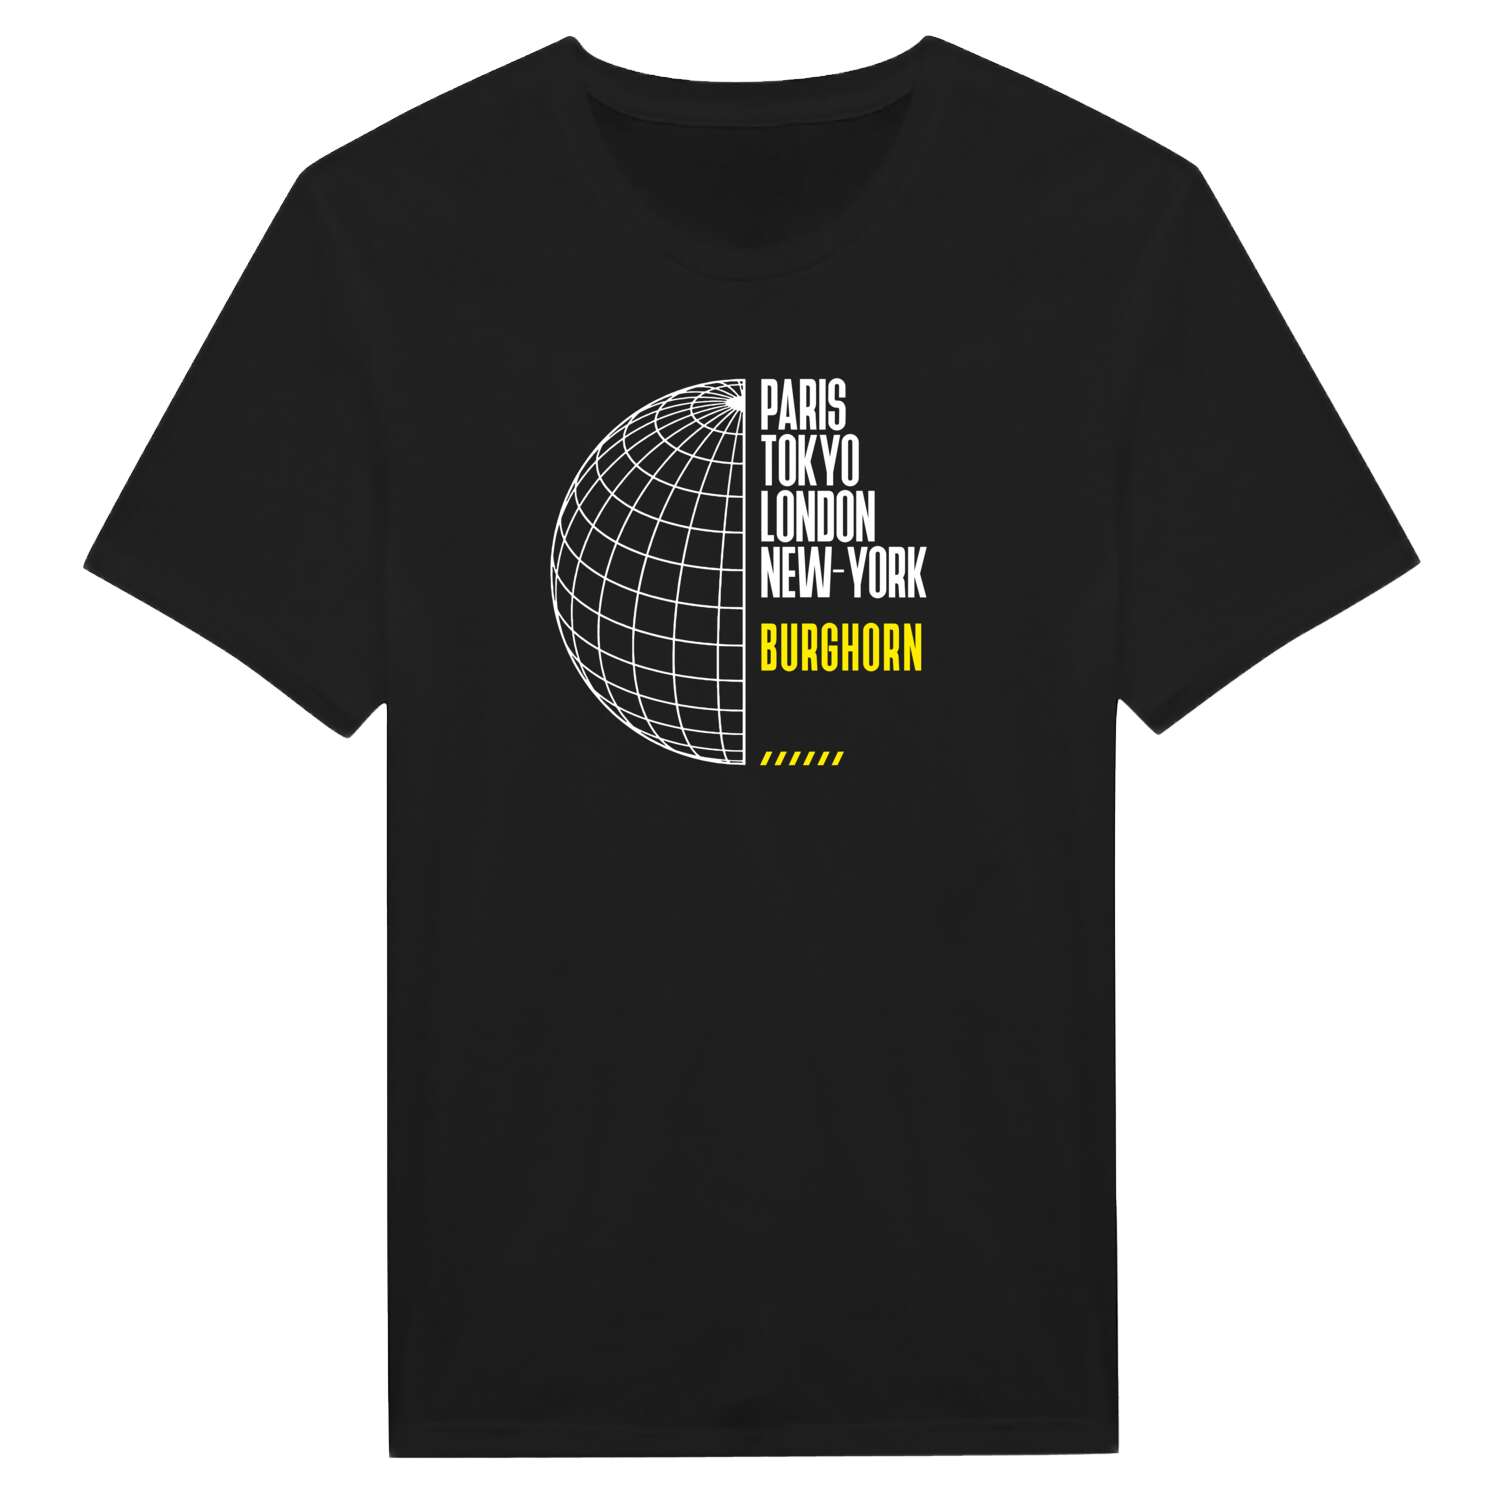 Burghorn T-Shirt »Paris Tokyo London«